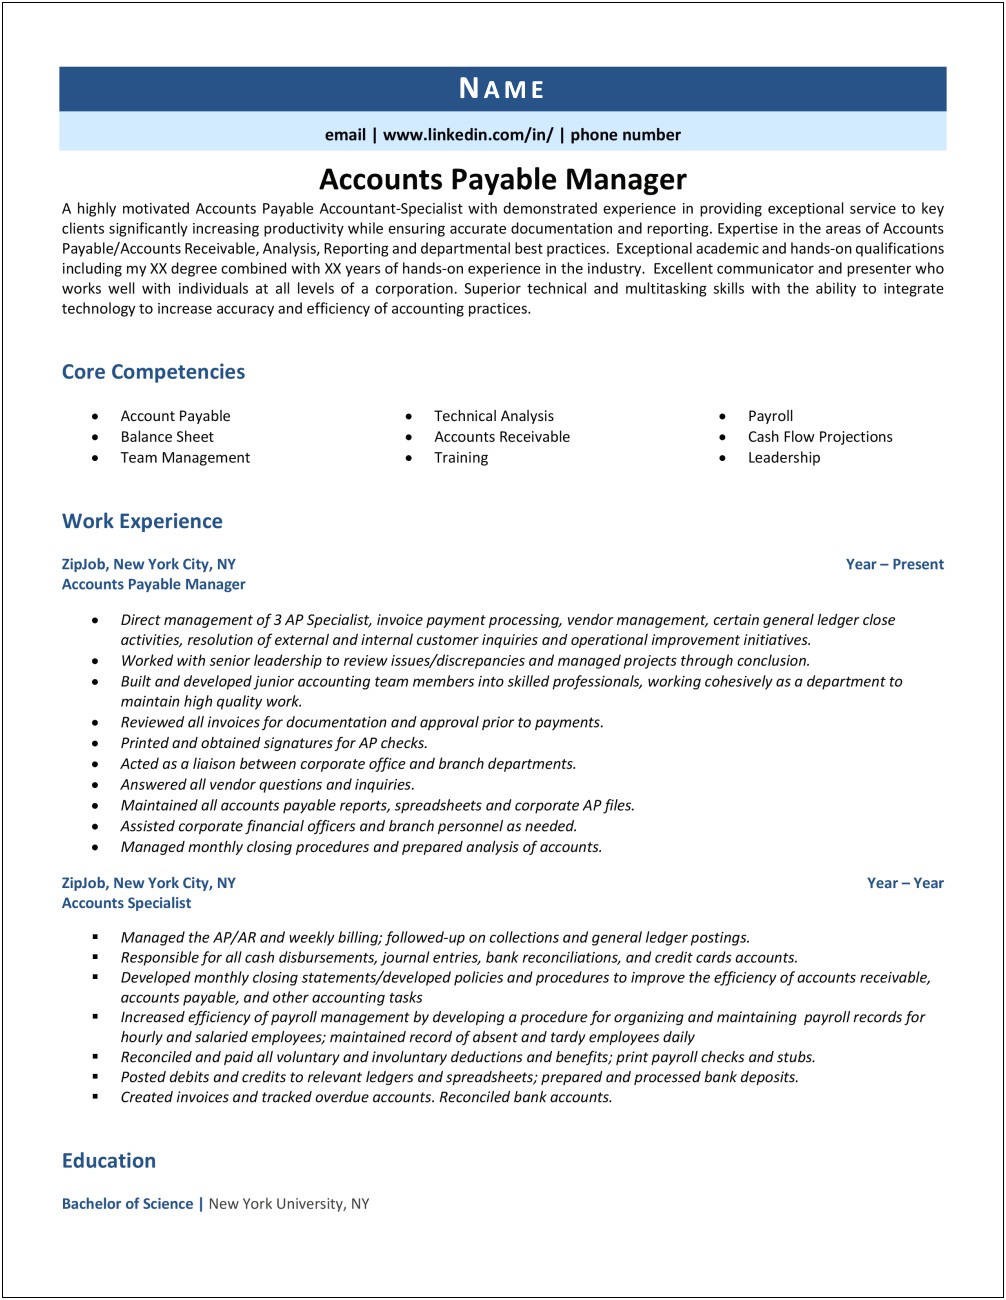 Accounts Payable Manager Resume Pdf